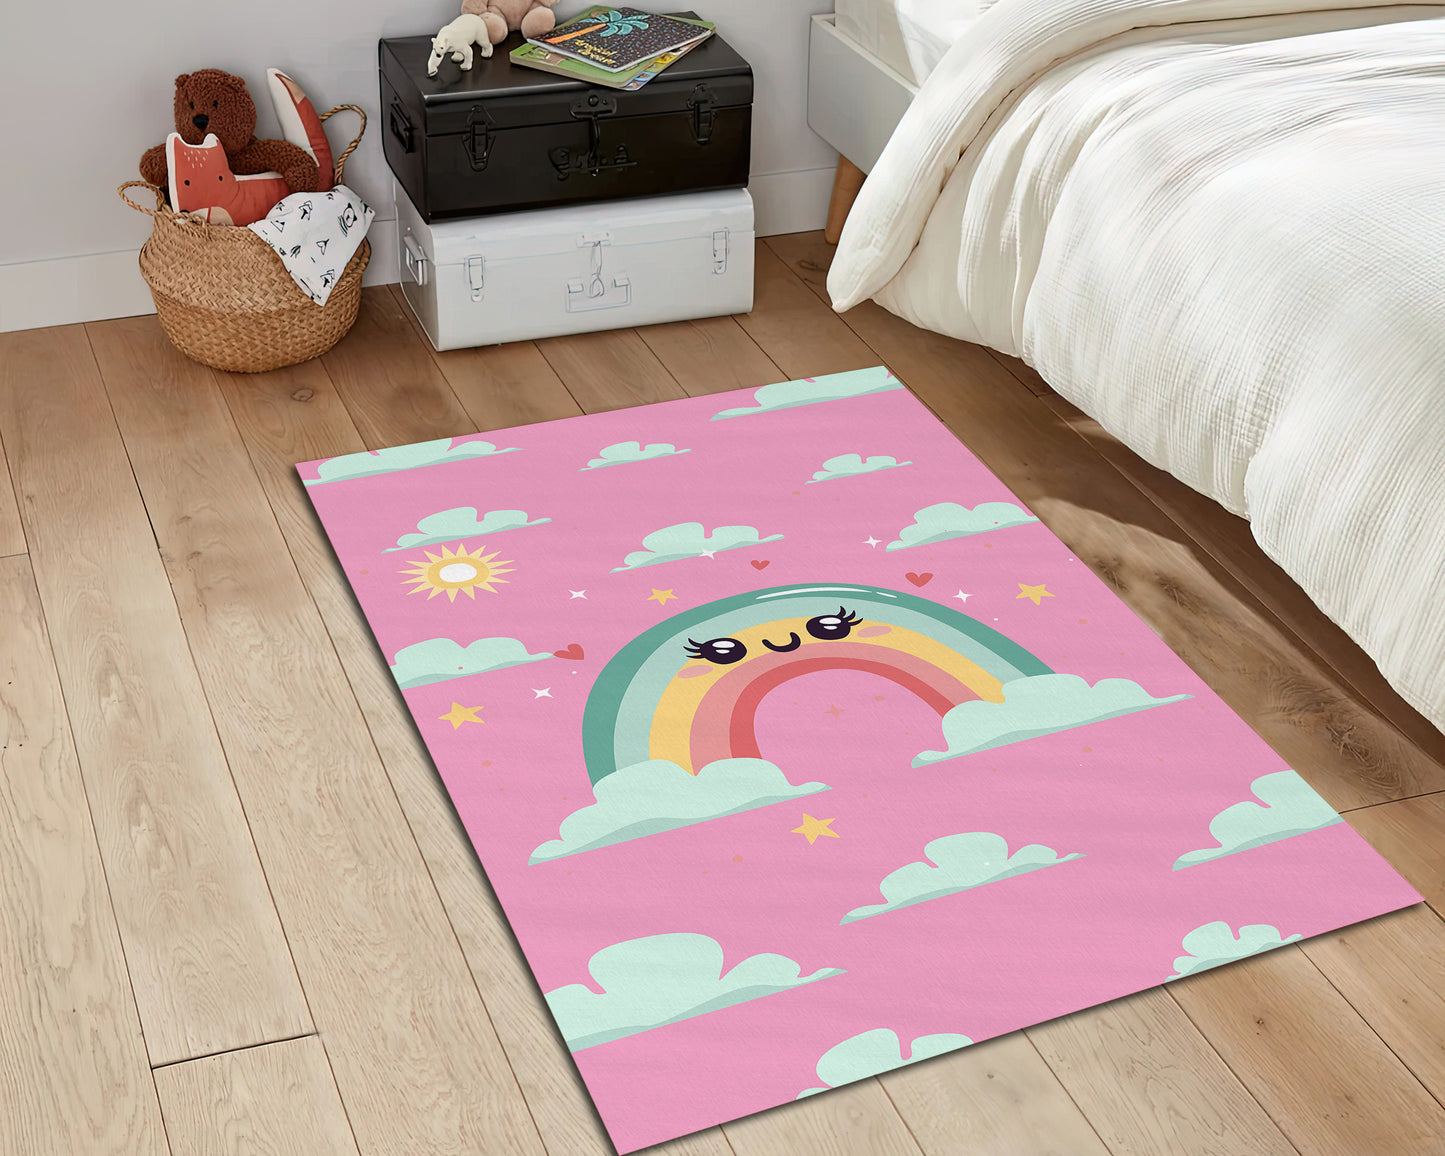 Kitty Cat Printed Rug, Children Room Decor, Rainbow Themed Carpet, Pink Baby Room Mat, New Born Baby Gift